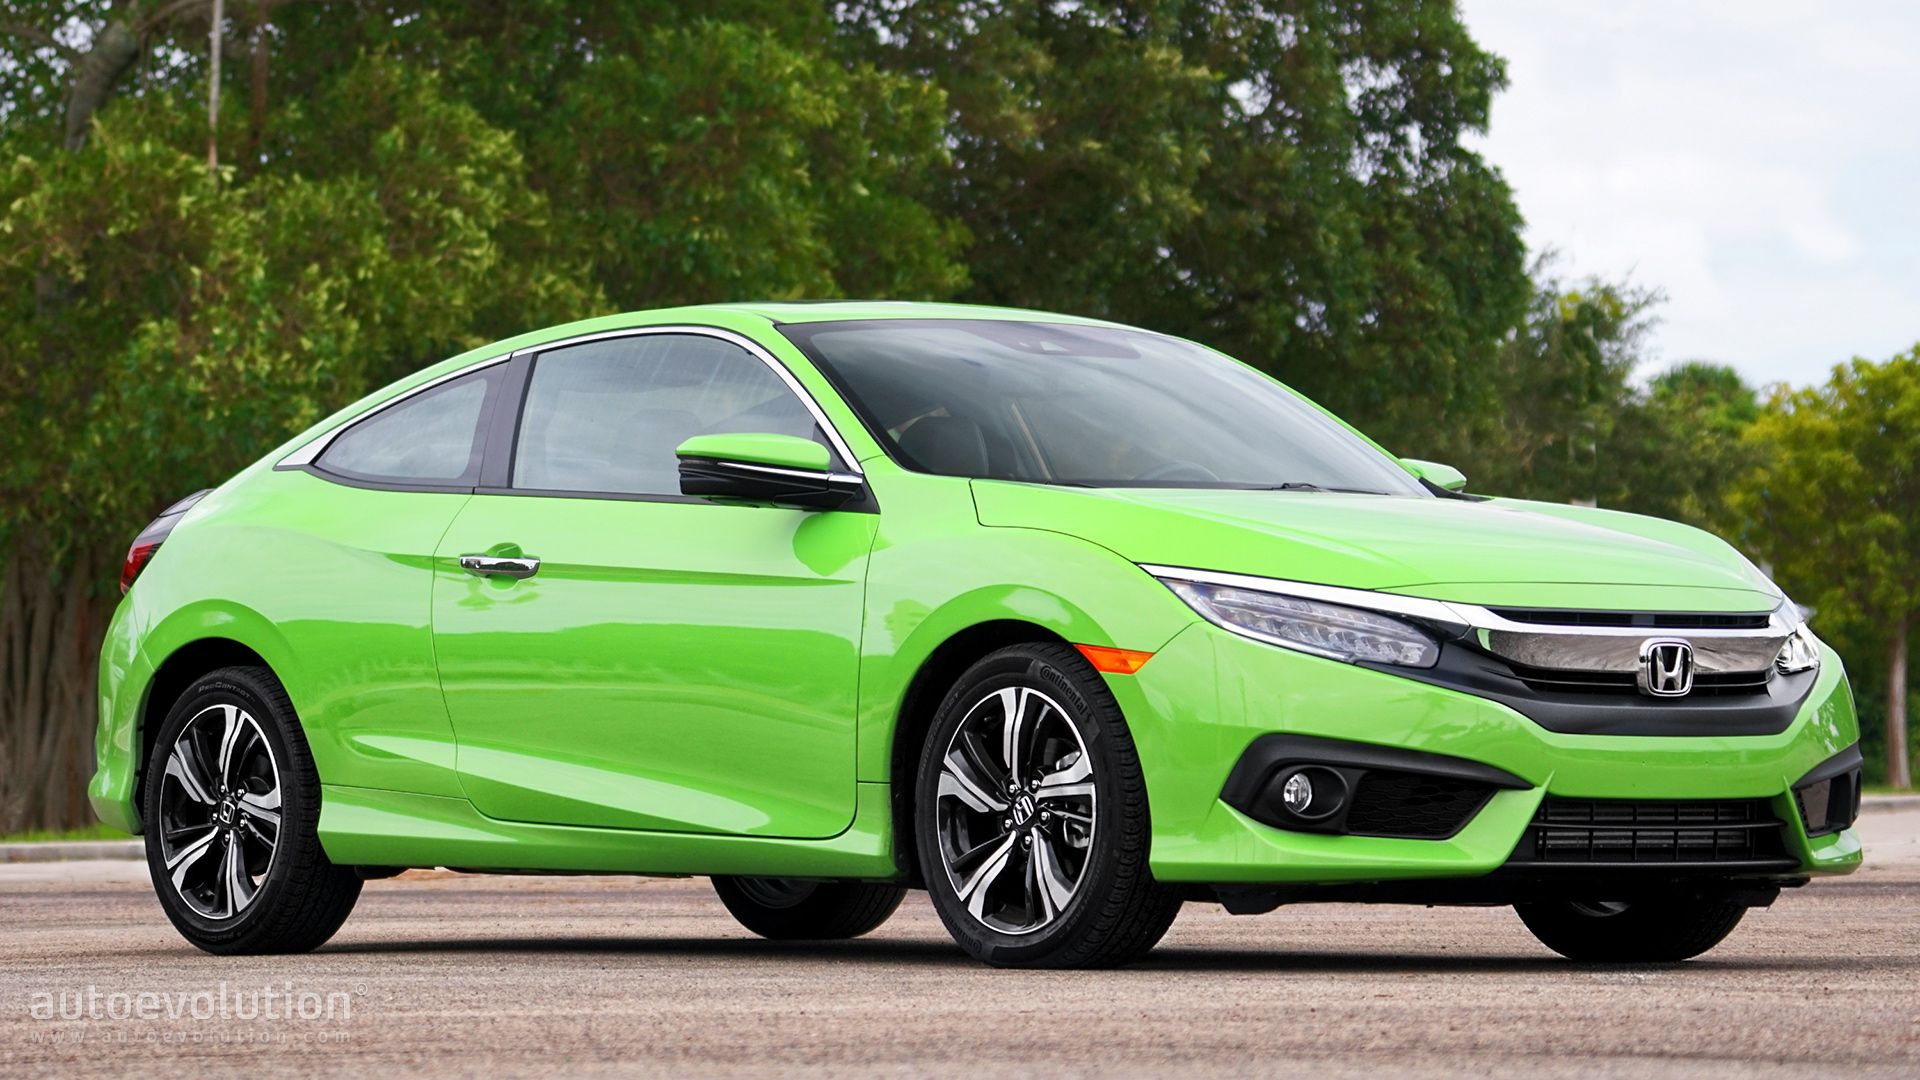 Honda Civic Coupe review & testdrive